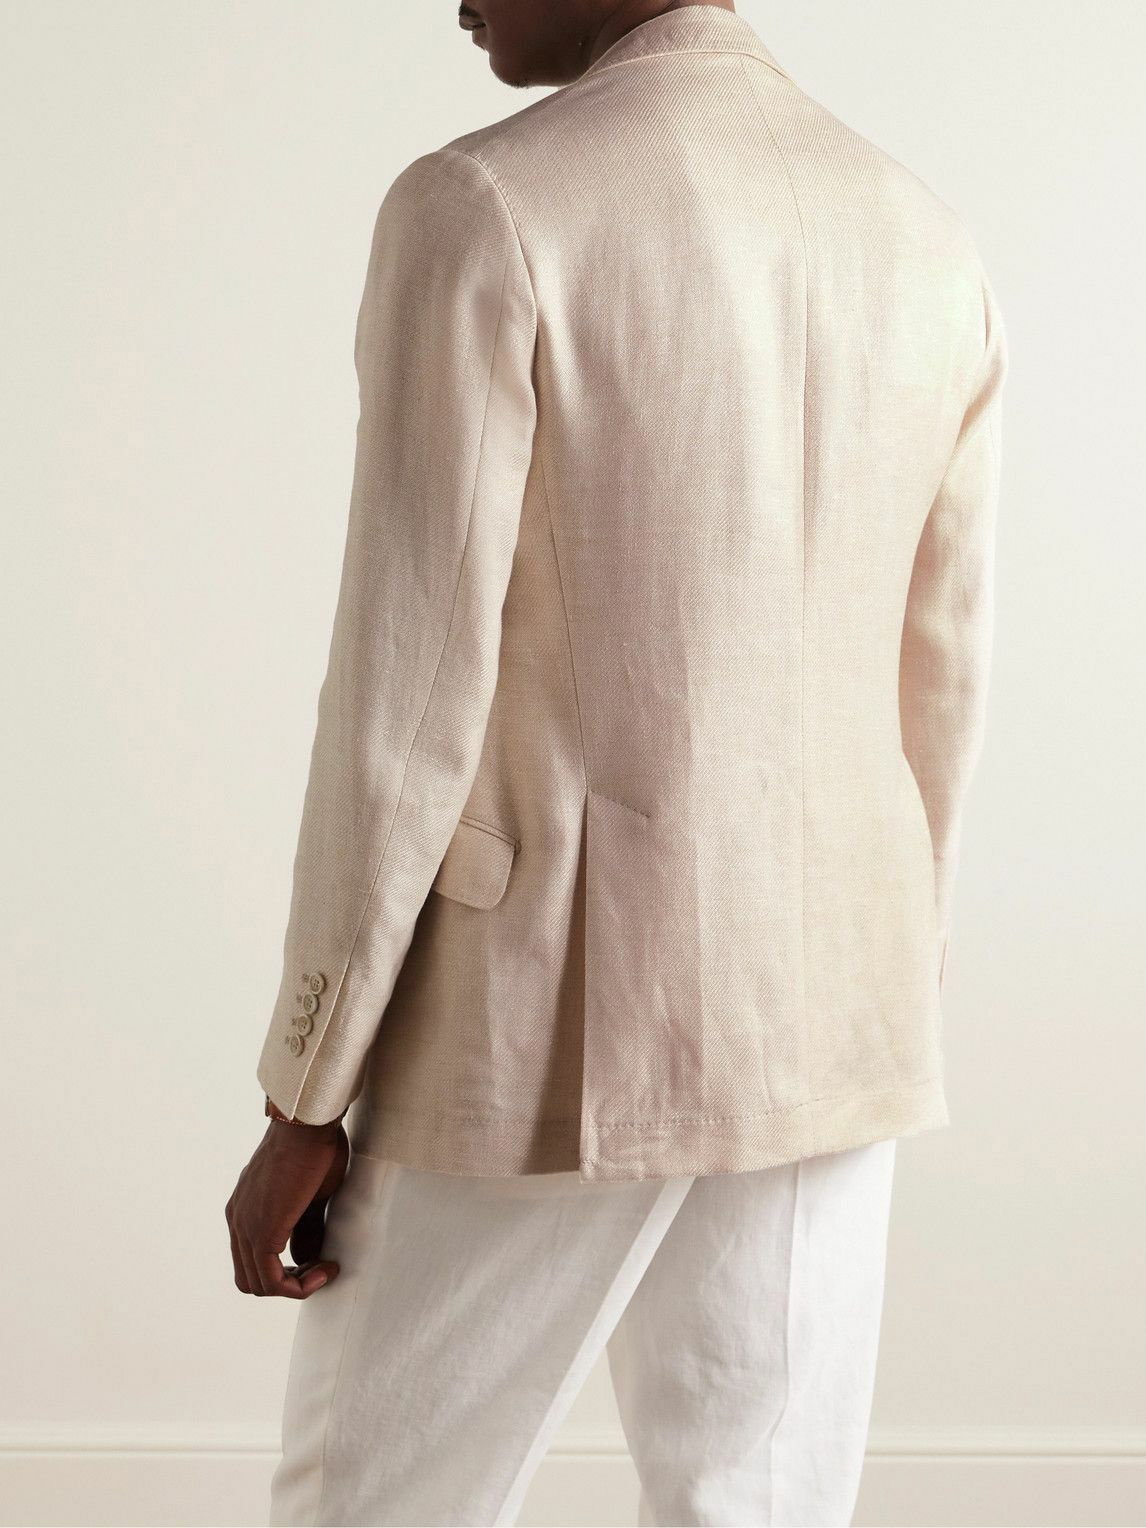 BRUNELLO CUCINELLI Linen and Wool-Blend Suit Jacket for Men